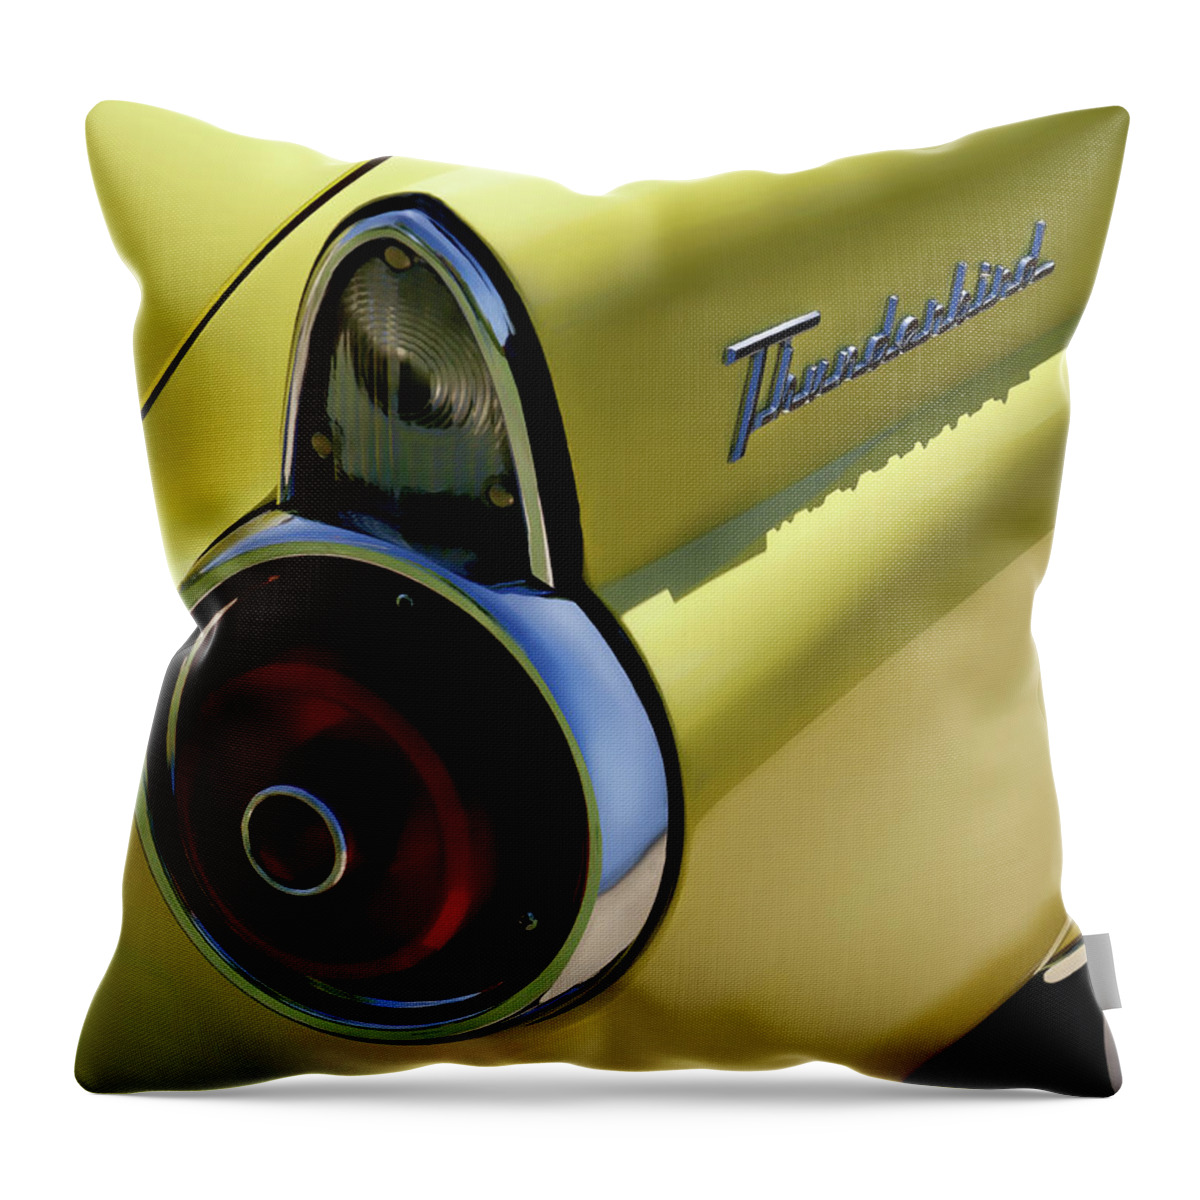 Thunderbird Throw Pillow featuring the digital art 1955 Thunderbird by Douglas Pittman